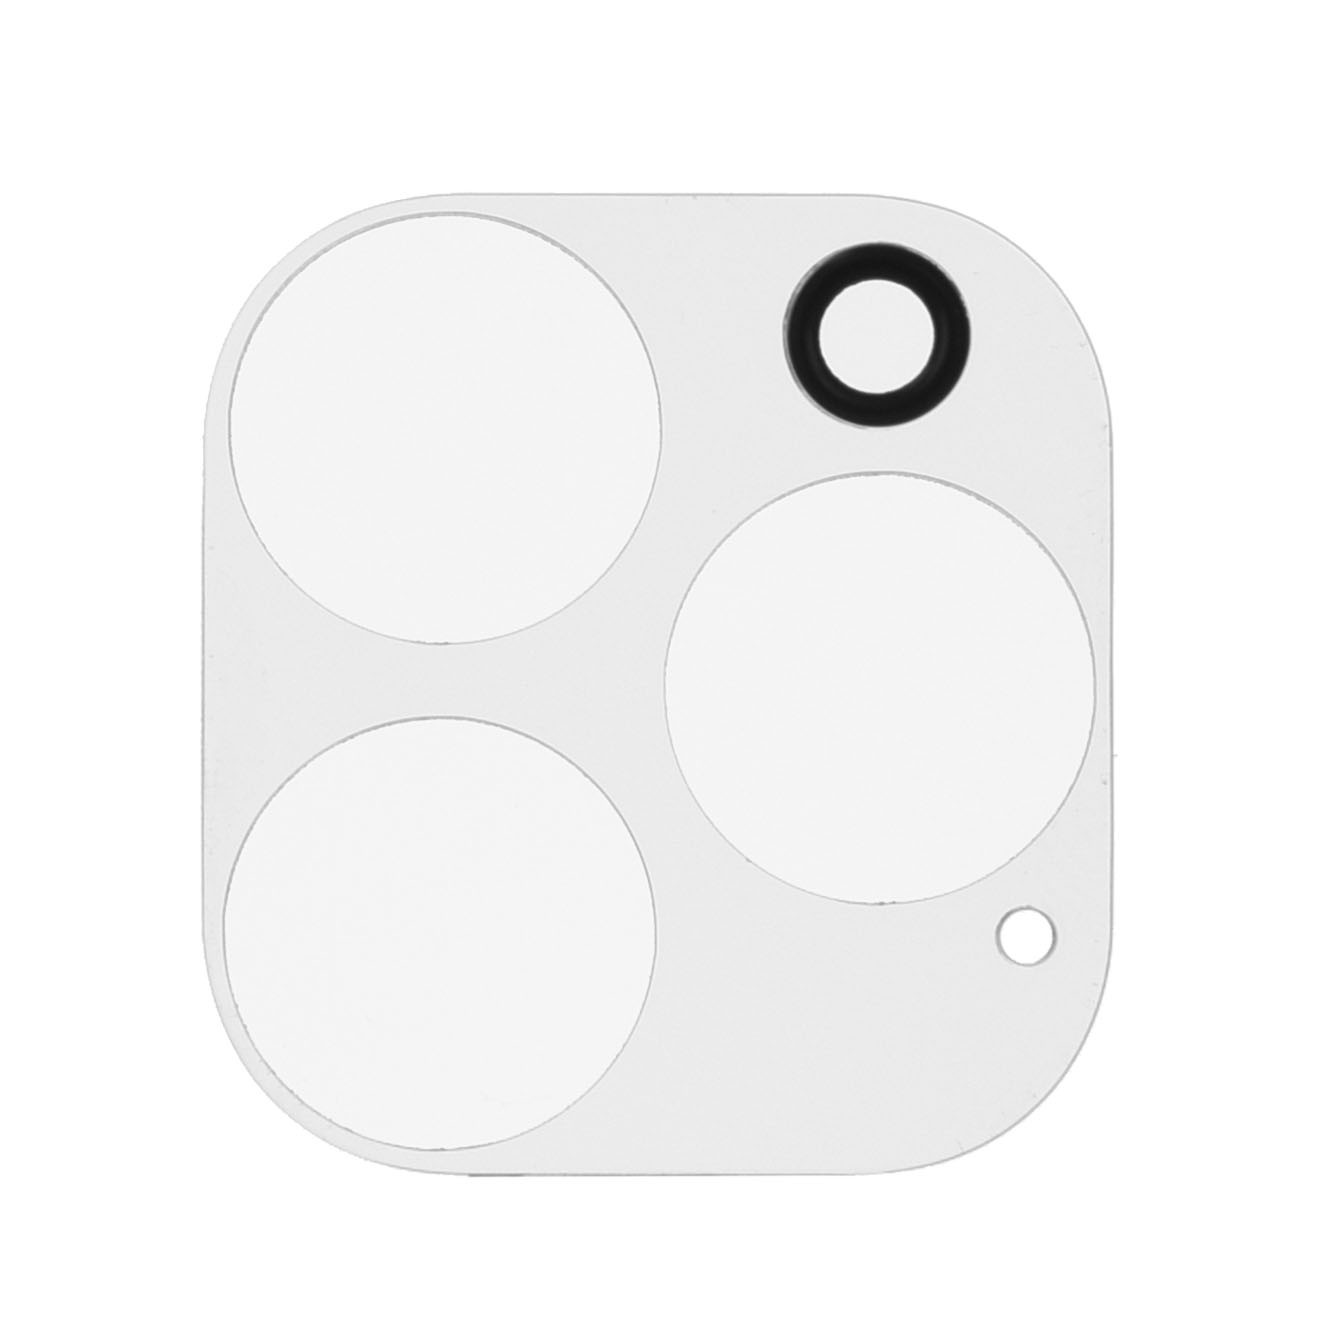 iPhone 12 Mini - Funda con protección de cámara (transparente